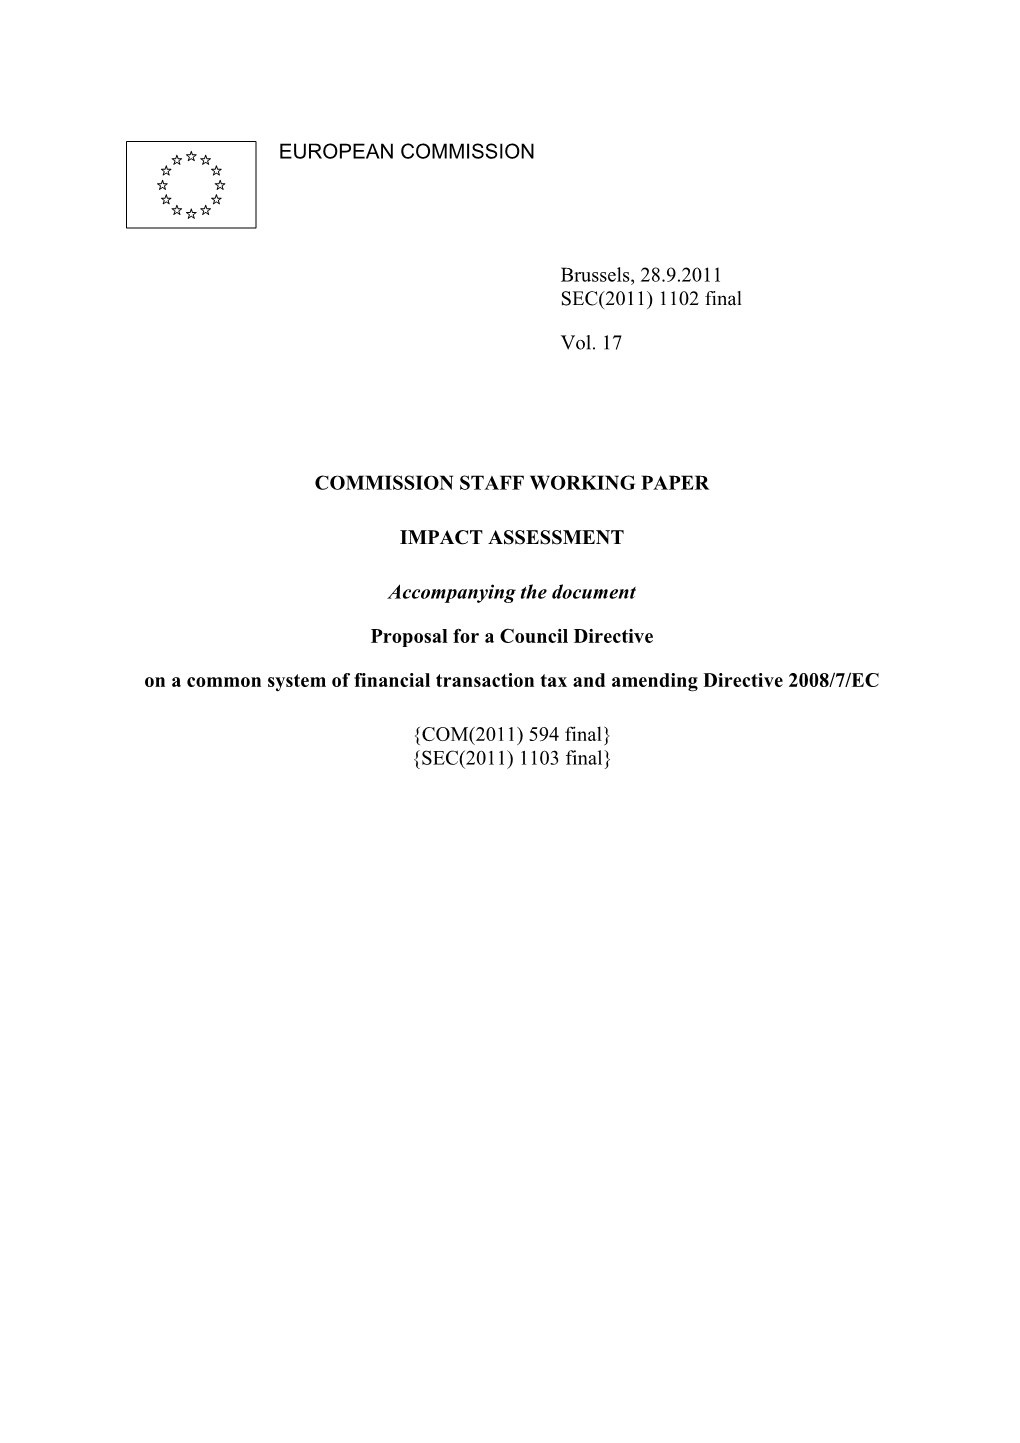 1102 Final Vol. 17 COMMISSION STAFF WORKING PAPER IMPACT ASSESSMENT Accompanyi